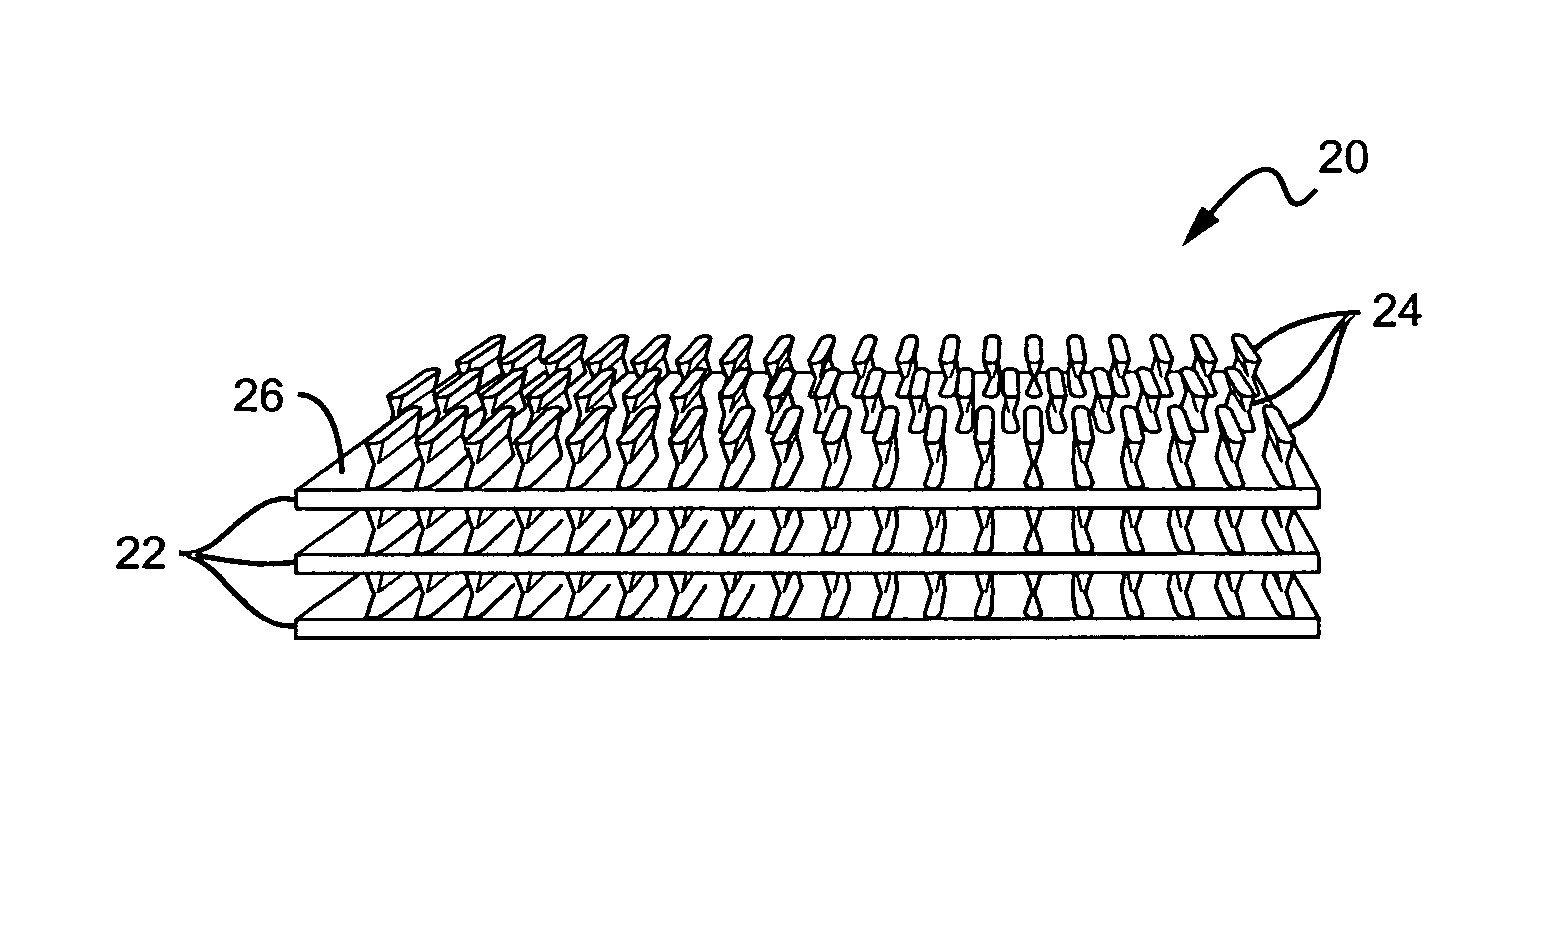 Method of making a heat exchanger